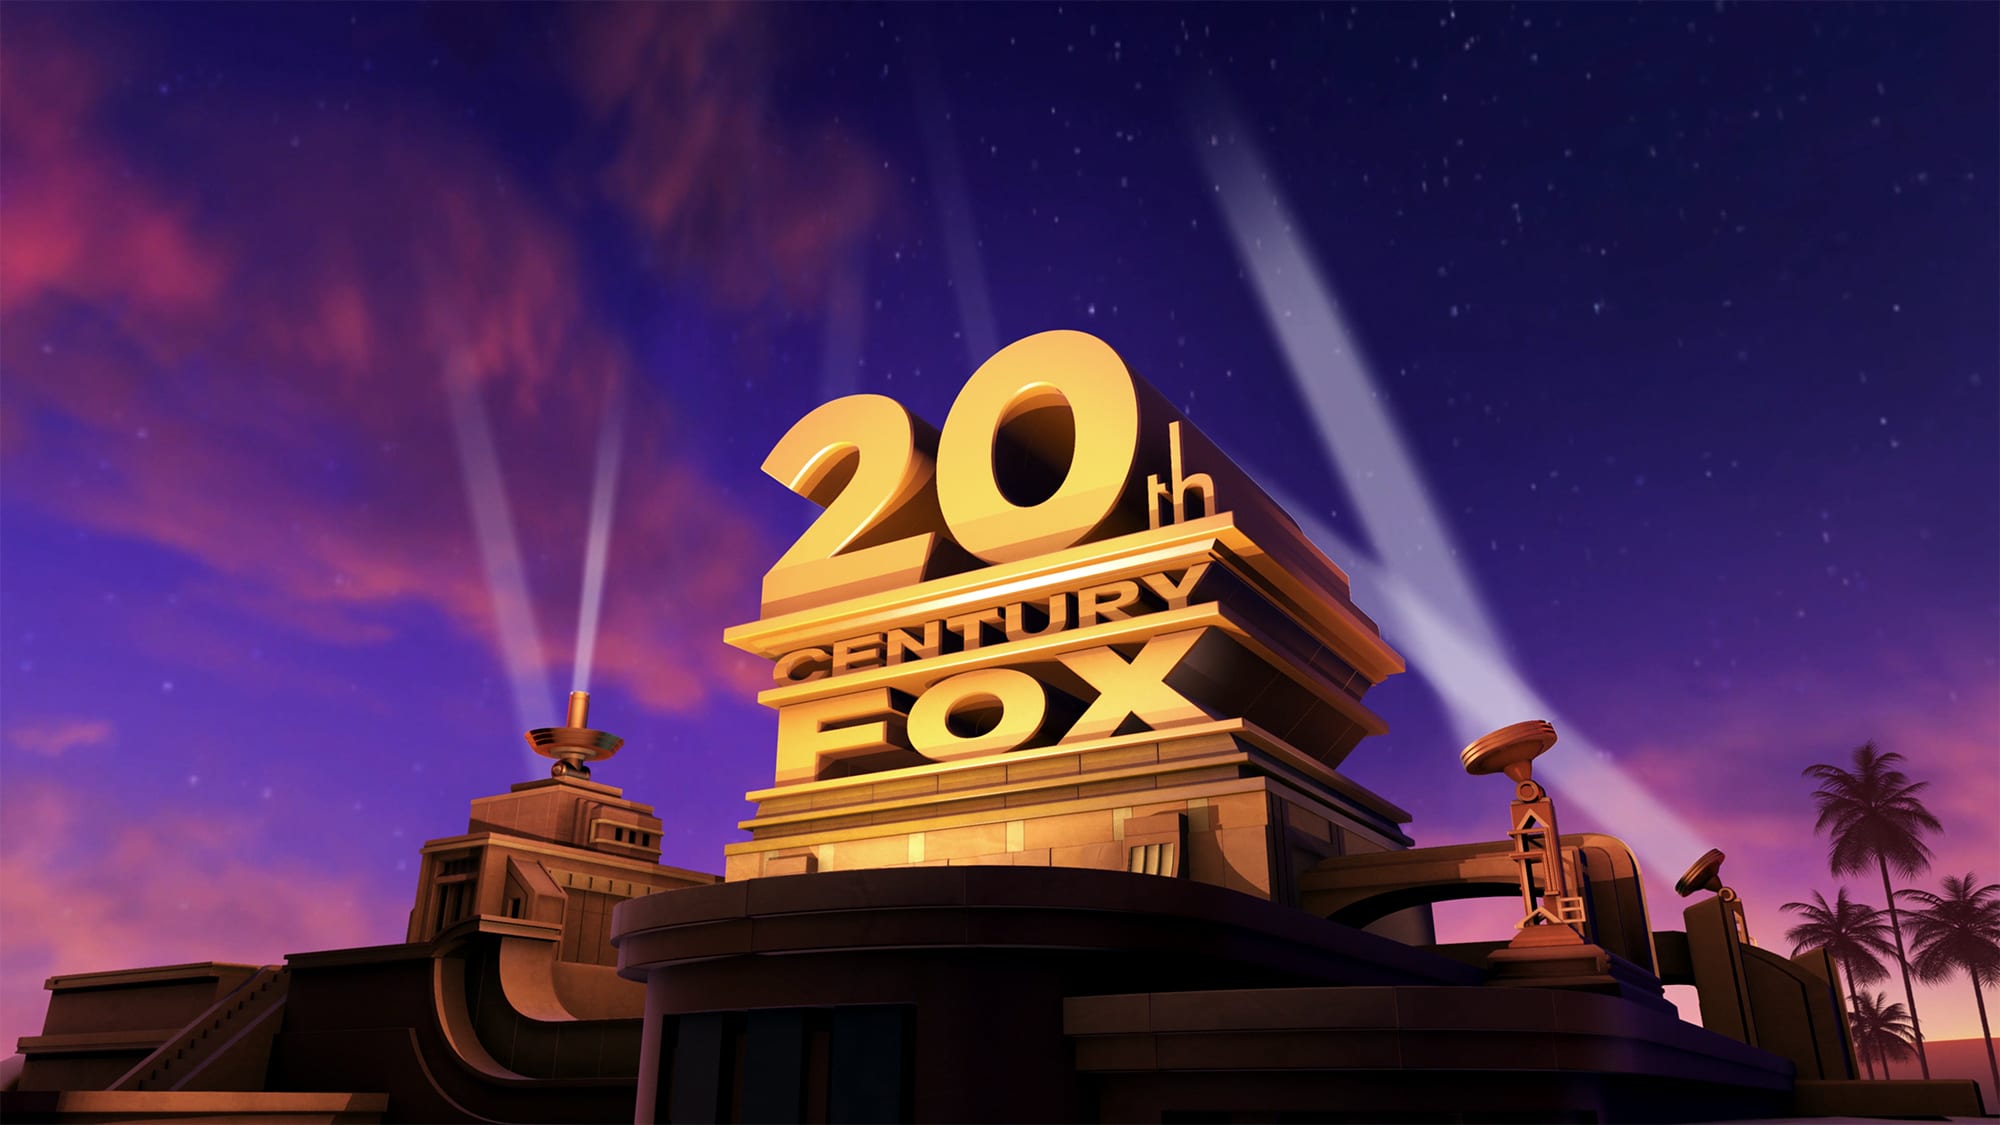 20 century fox intro download video